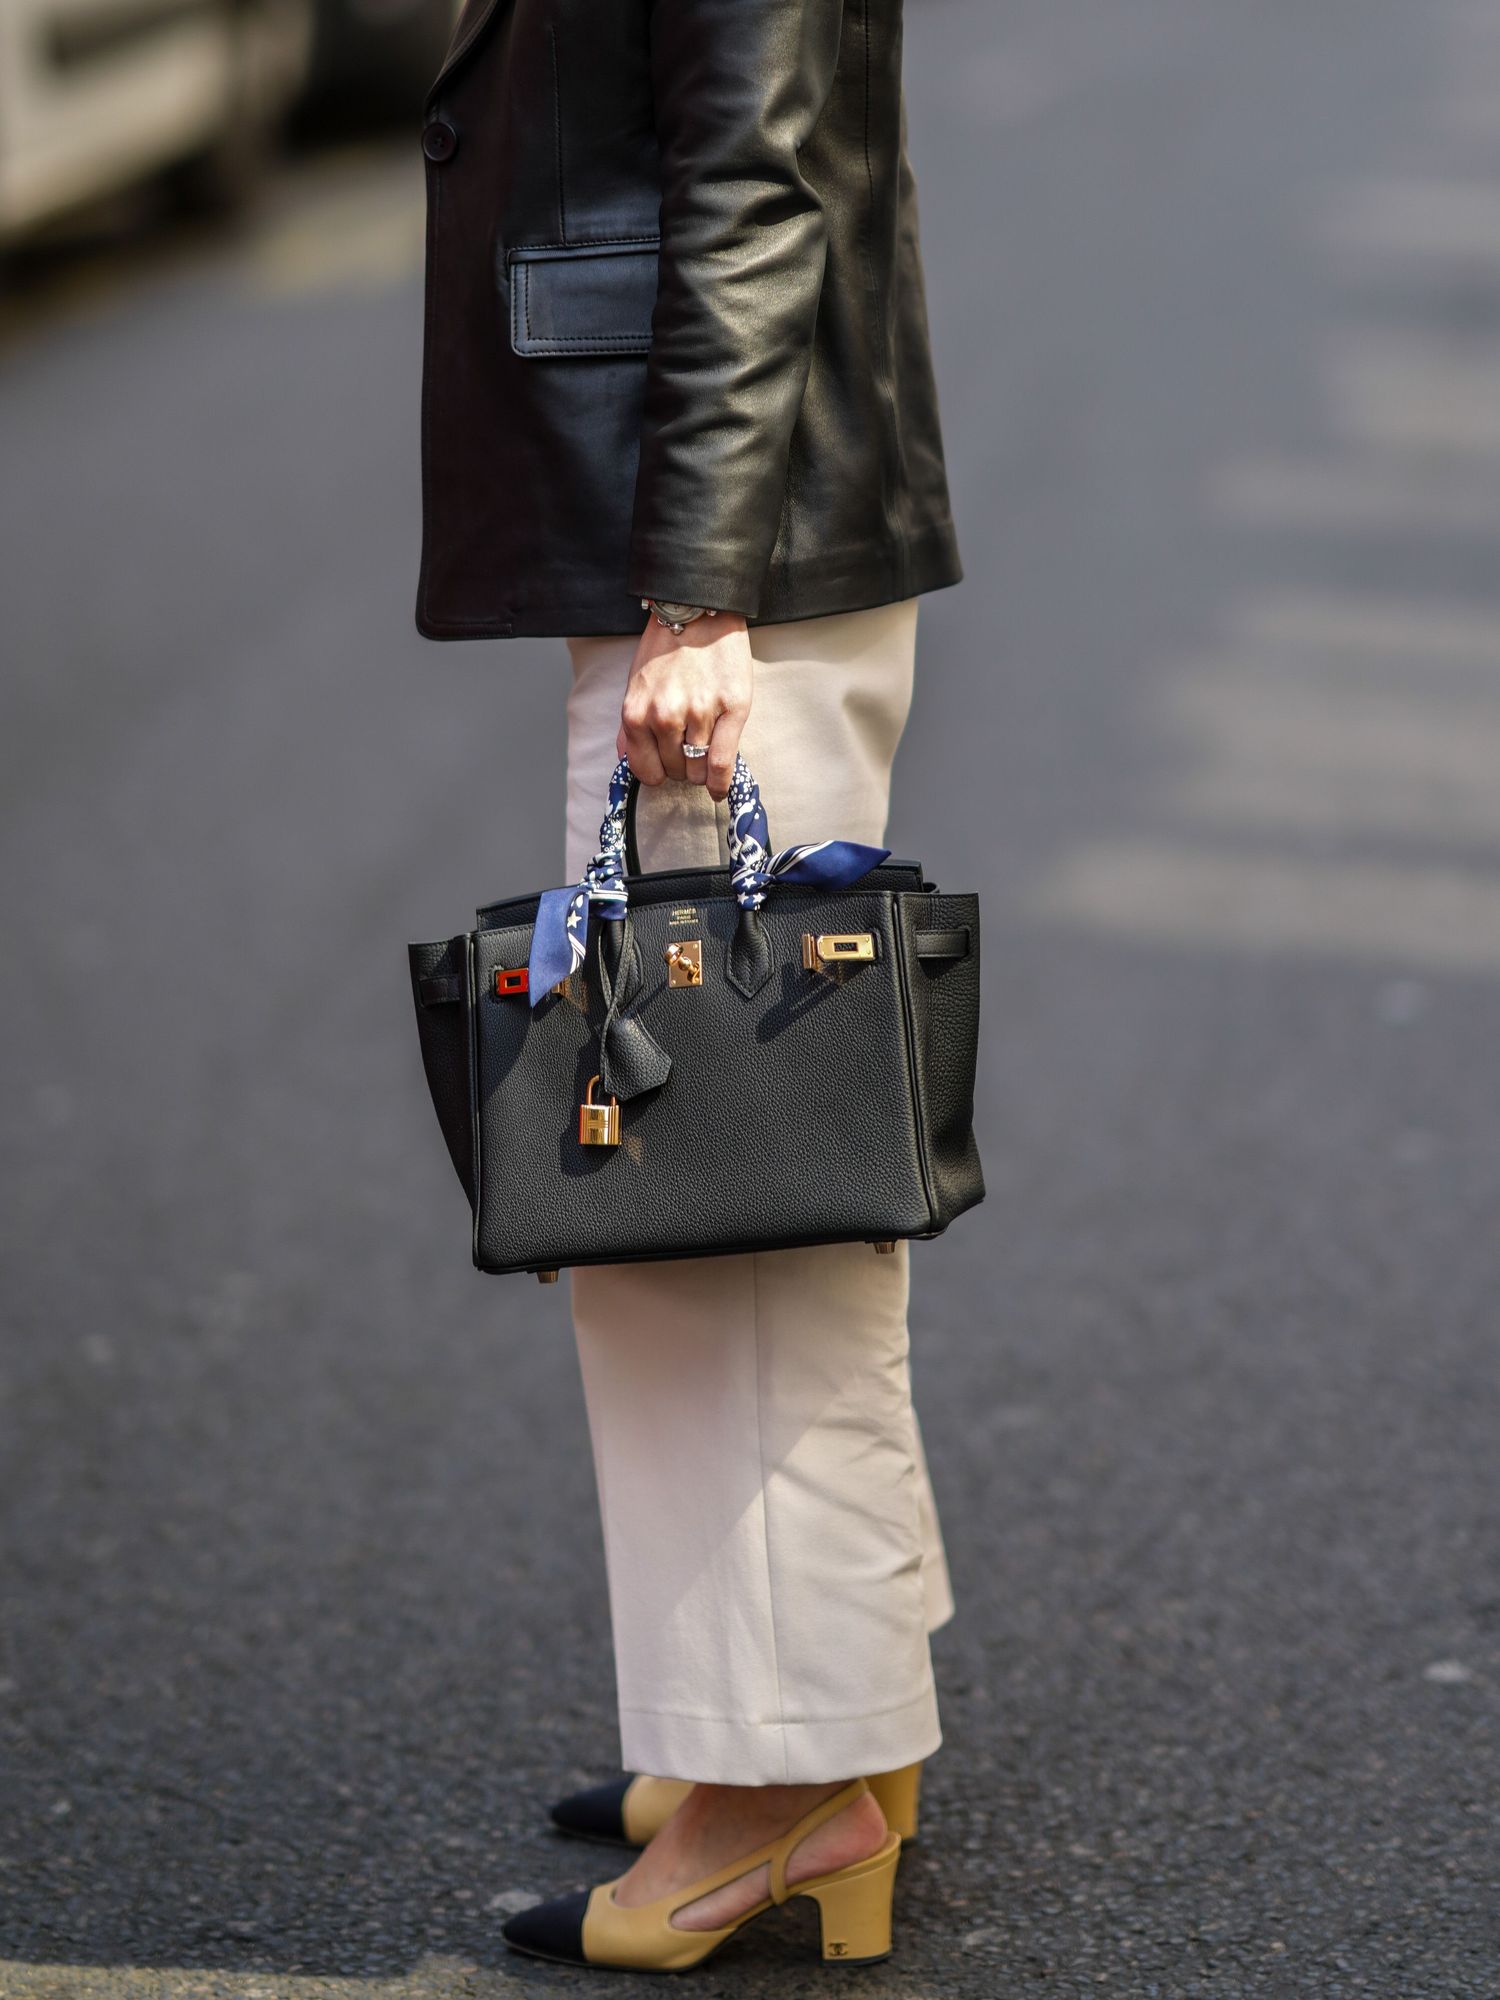 Best iconic designer handbags: Chanel, Dior, Hermes, Gucci